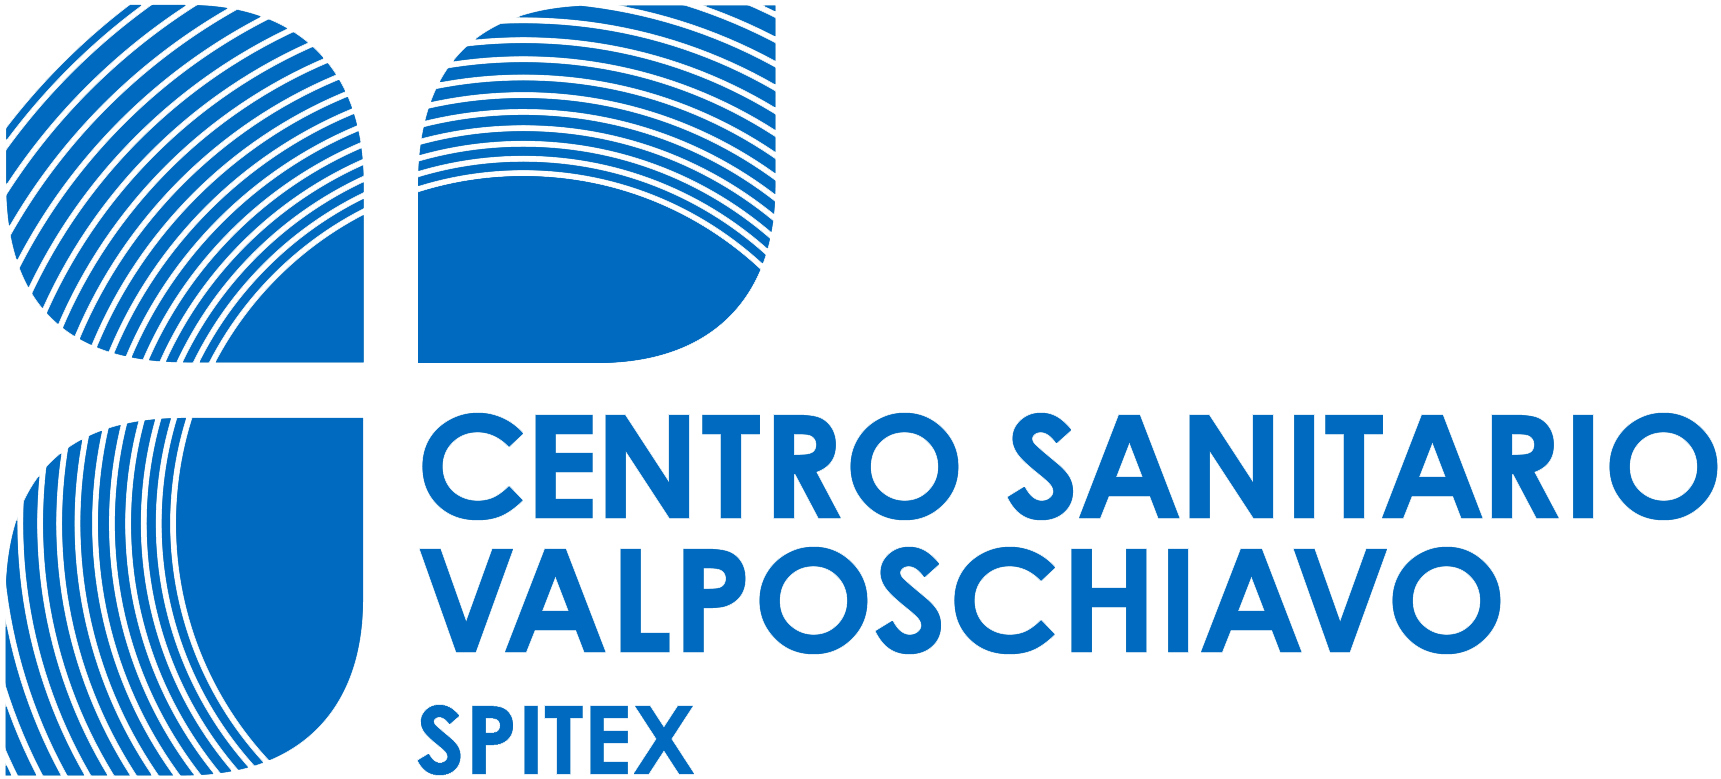 Centro sanitario Valposchiavo Spitex